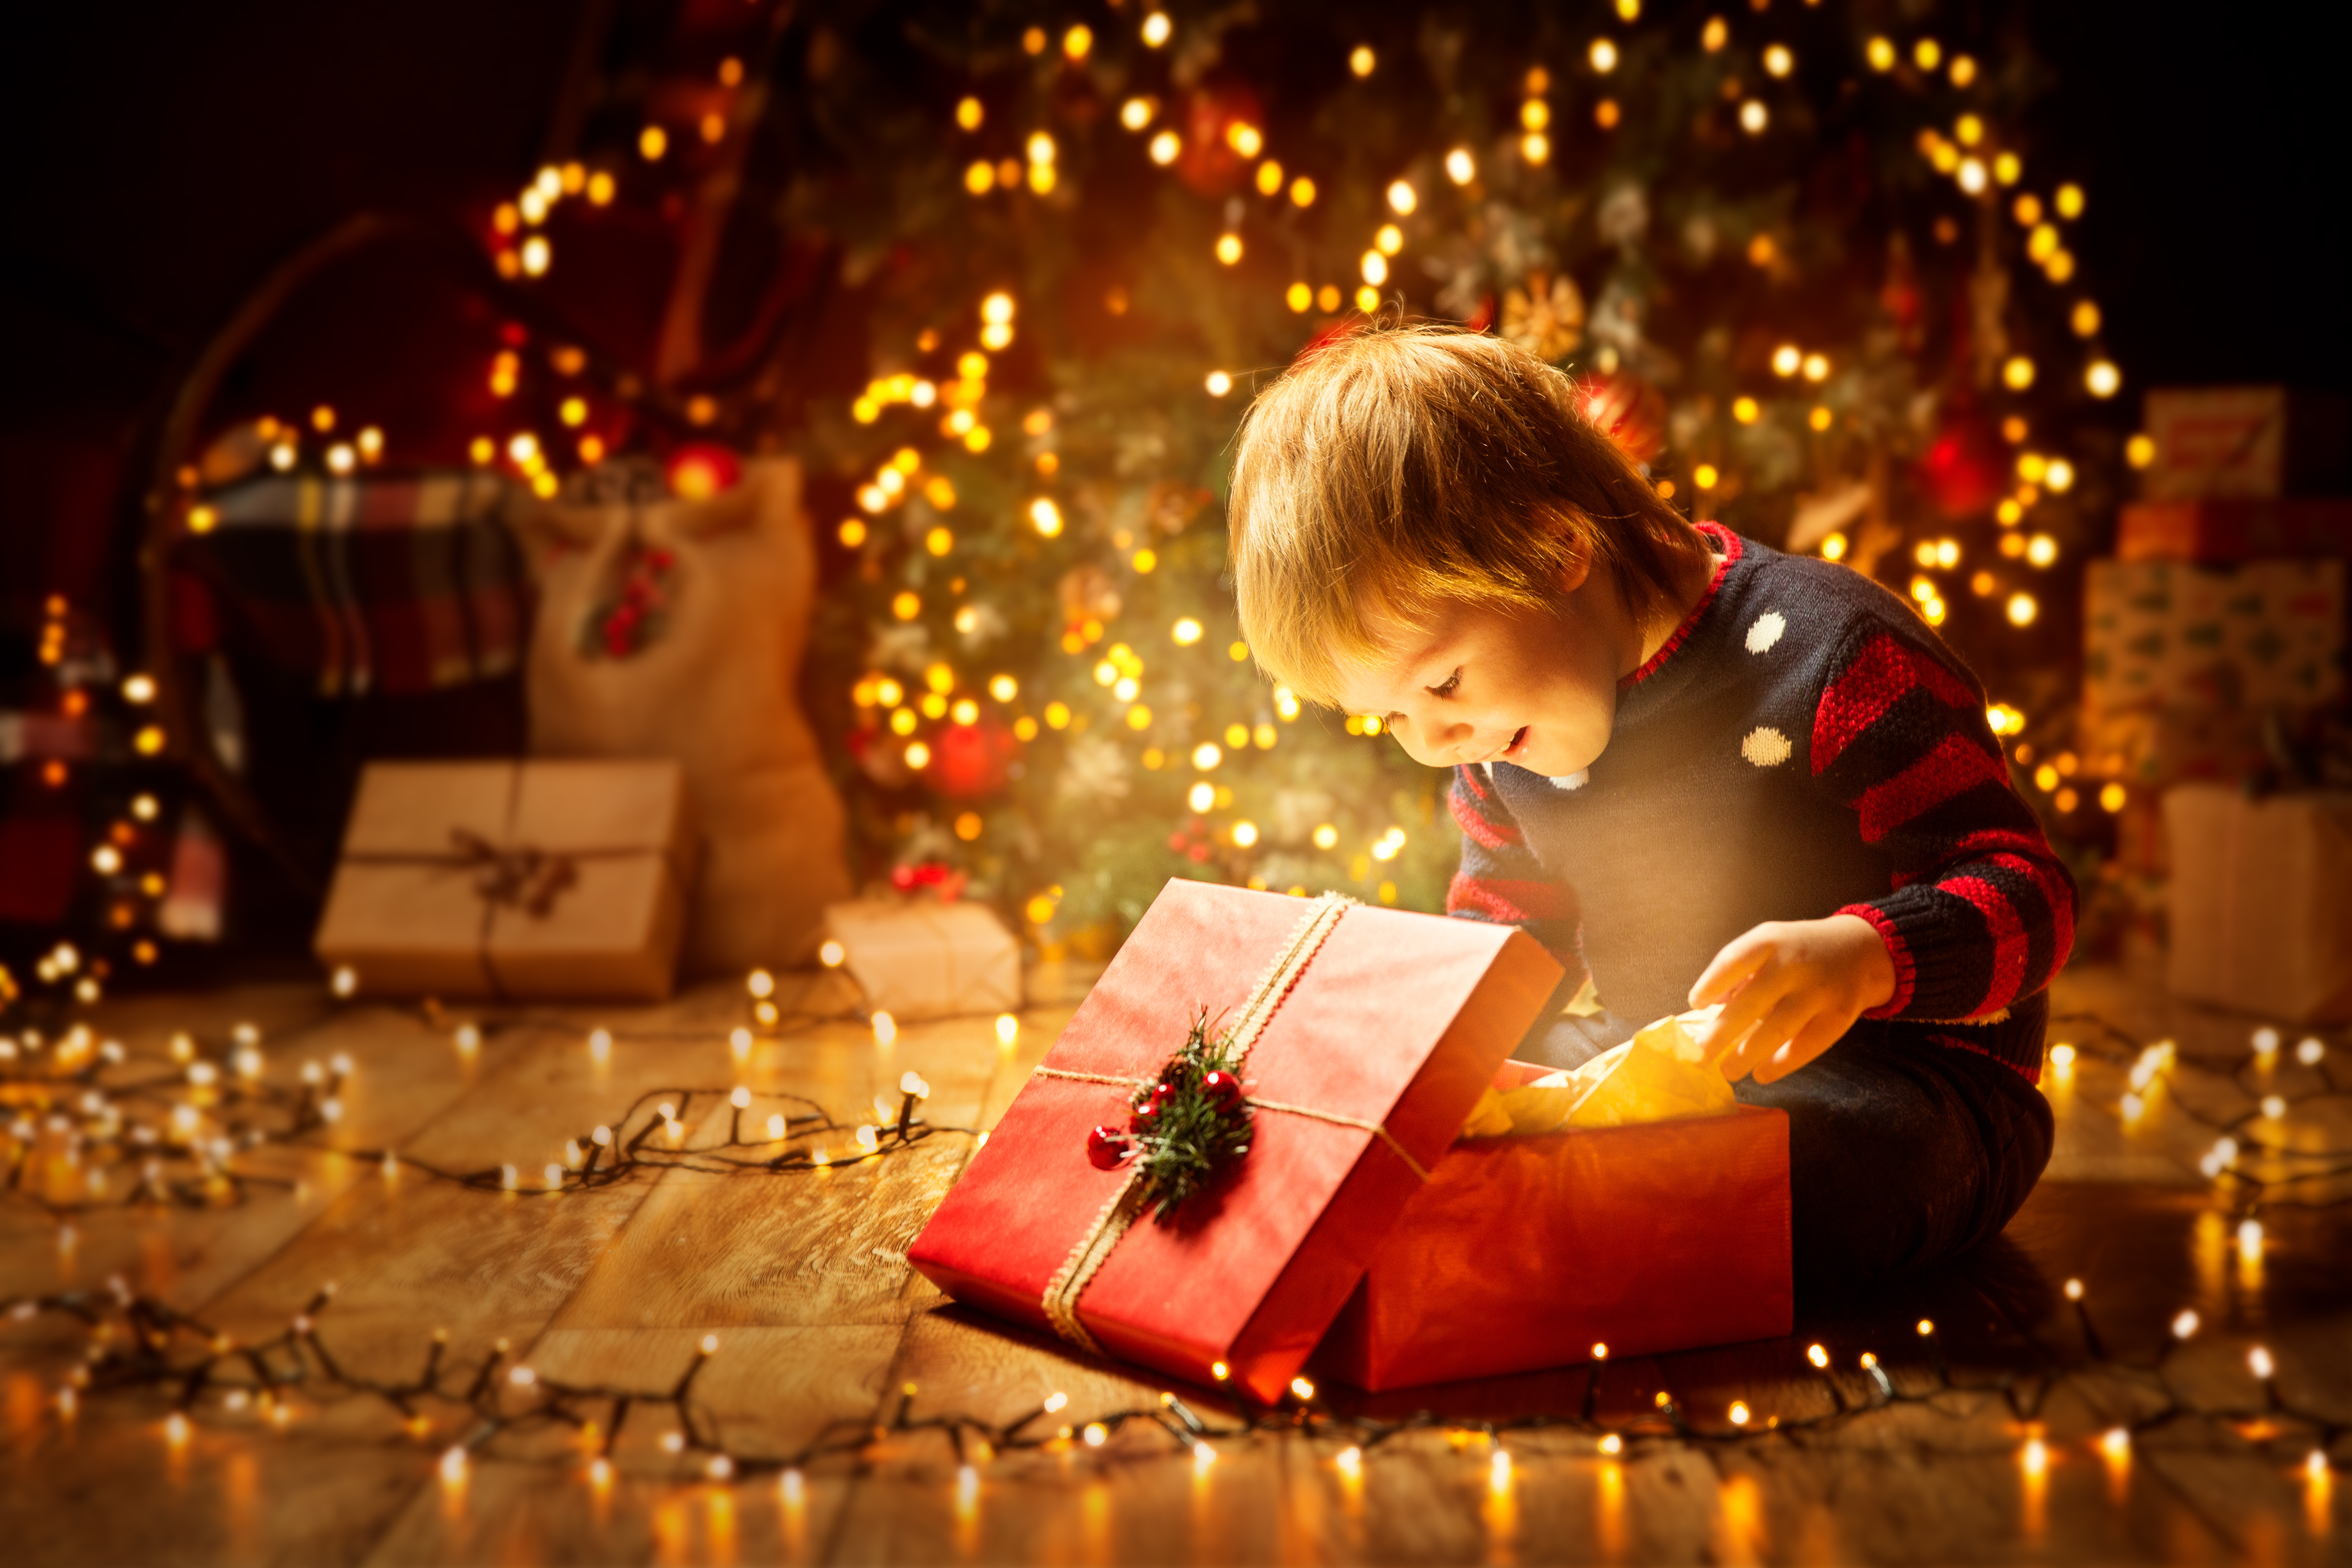 A boy opening a Christmas gift box | Source: Shutterstock